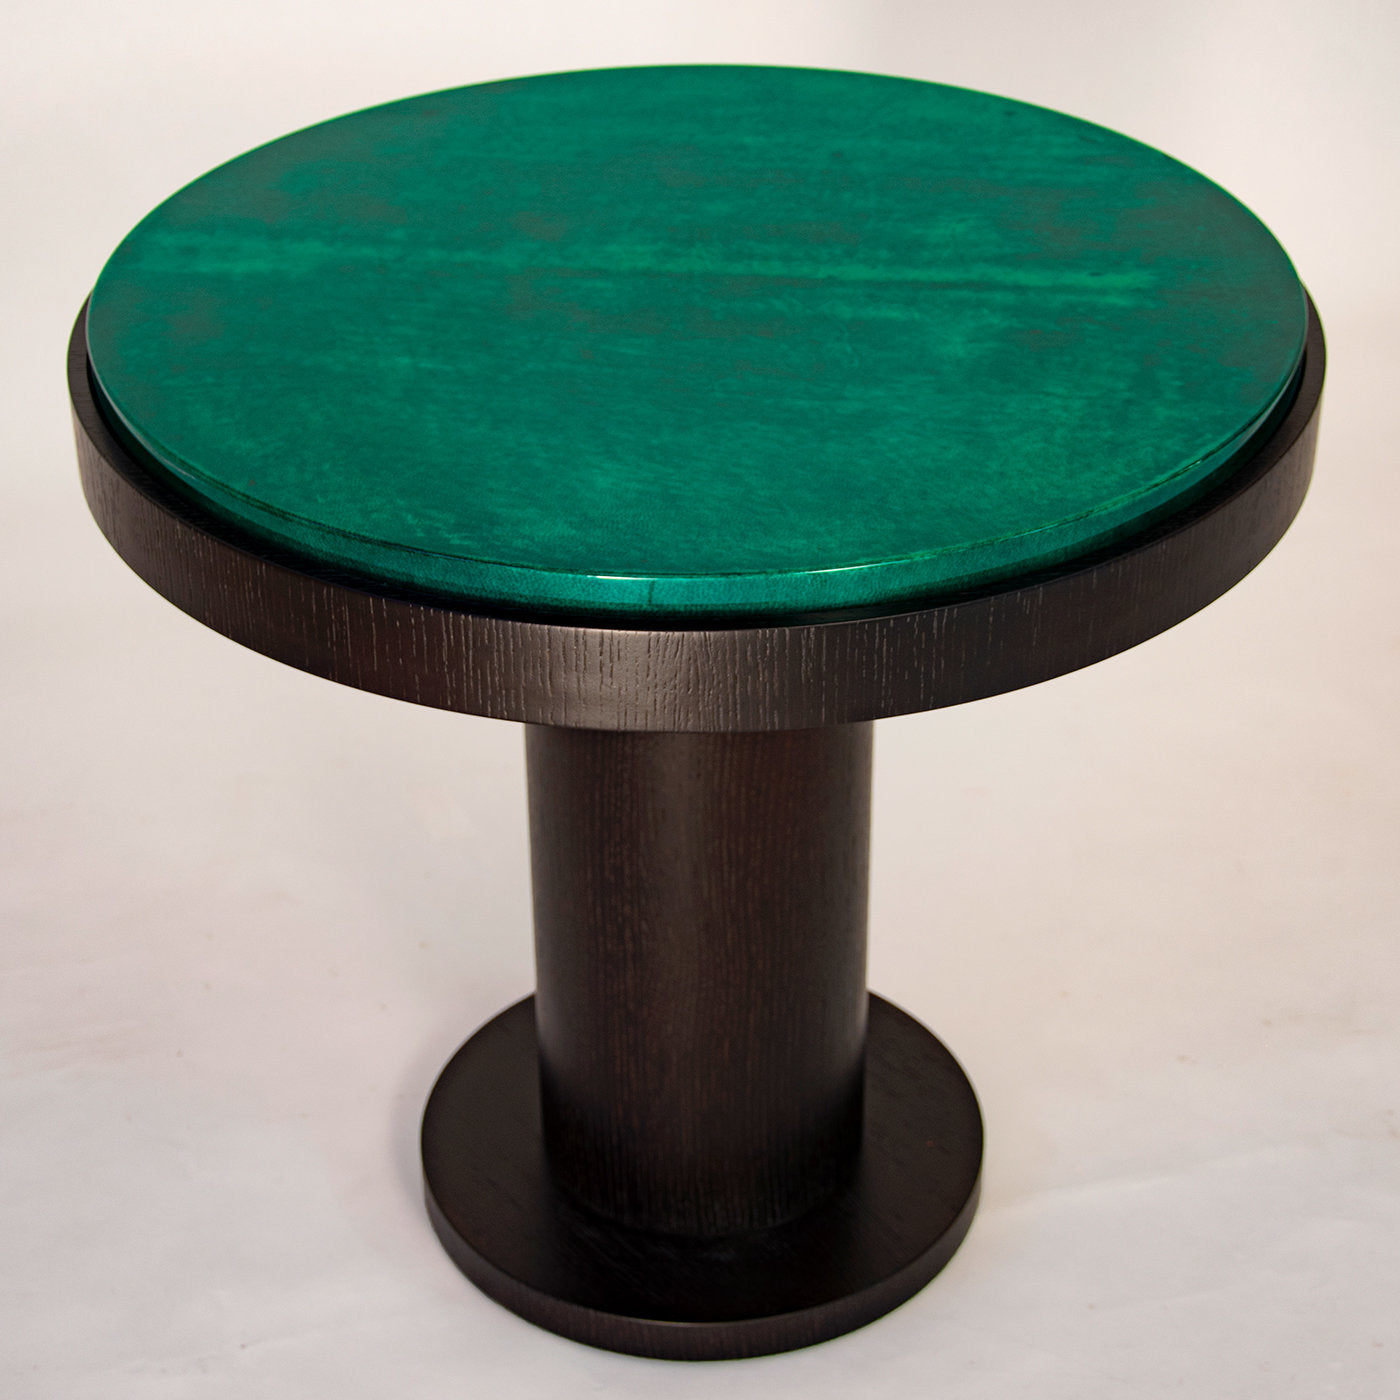 Table d'appoint zen verte - Vue alternative 2